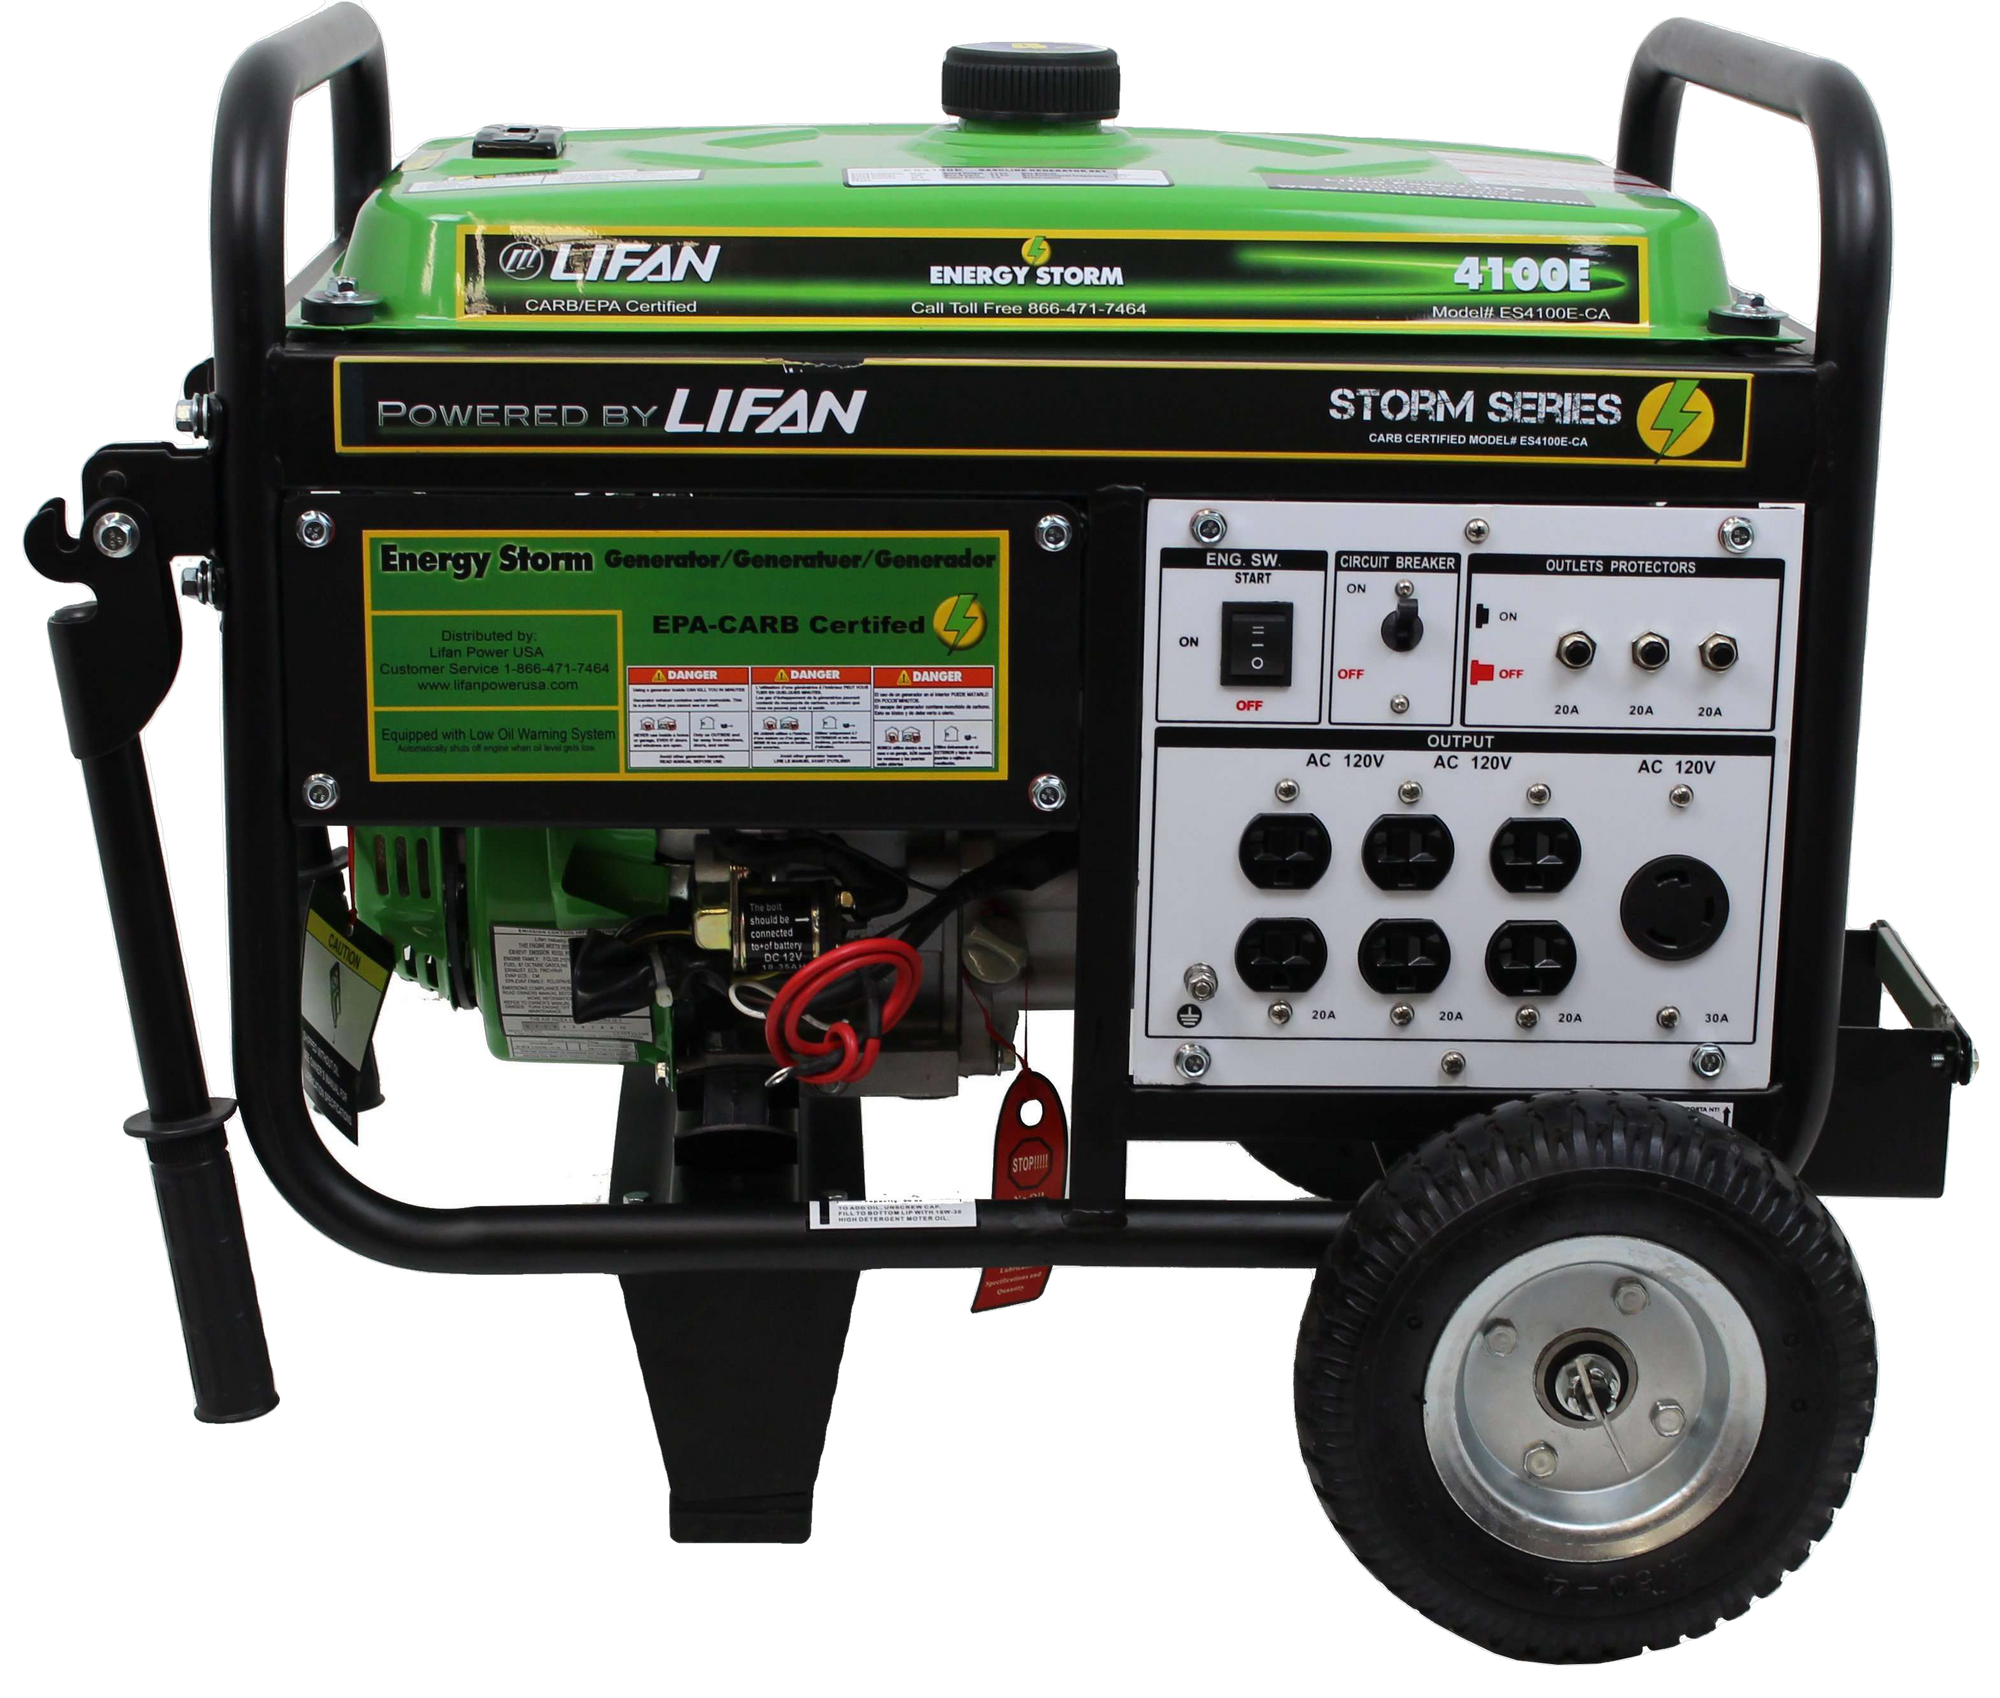 Lifan ES4100E Energy Storm 3500W/4100W Electric Start Generator Manufacturer RFB